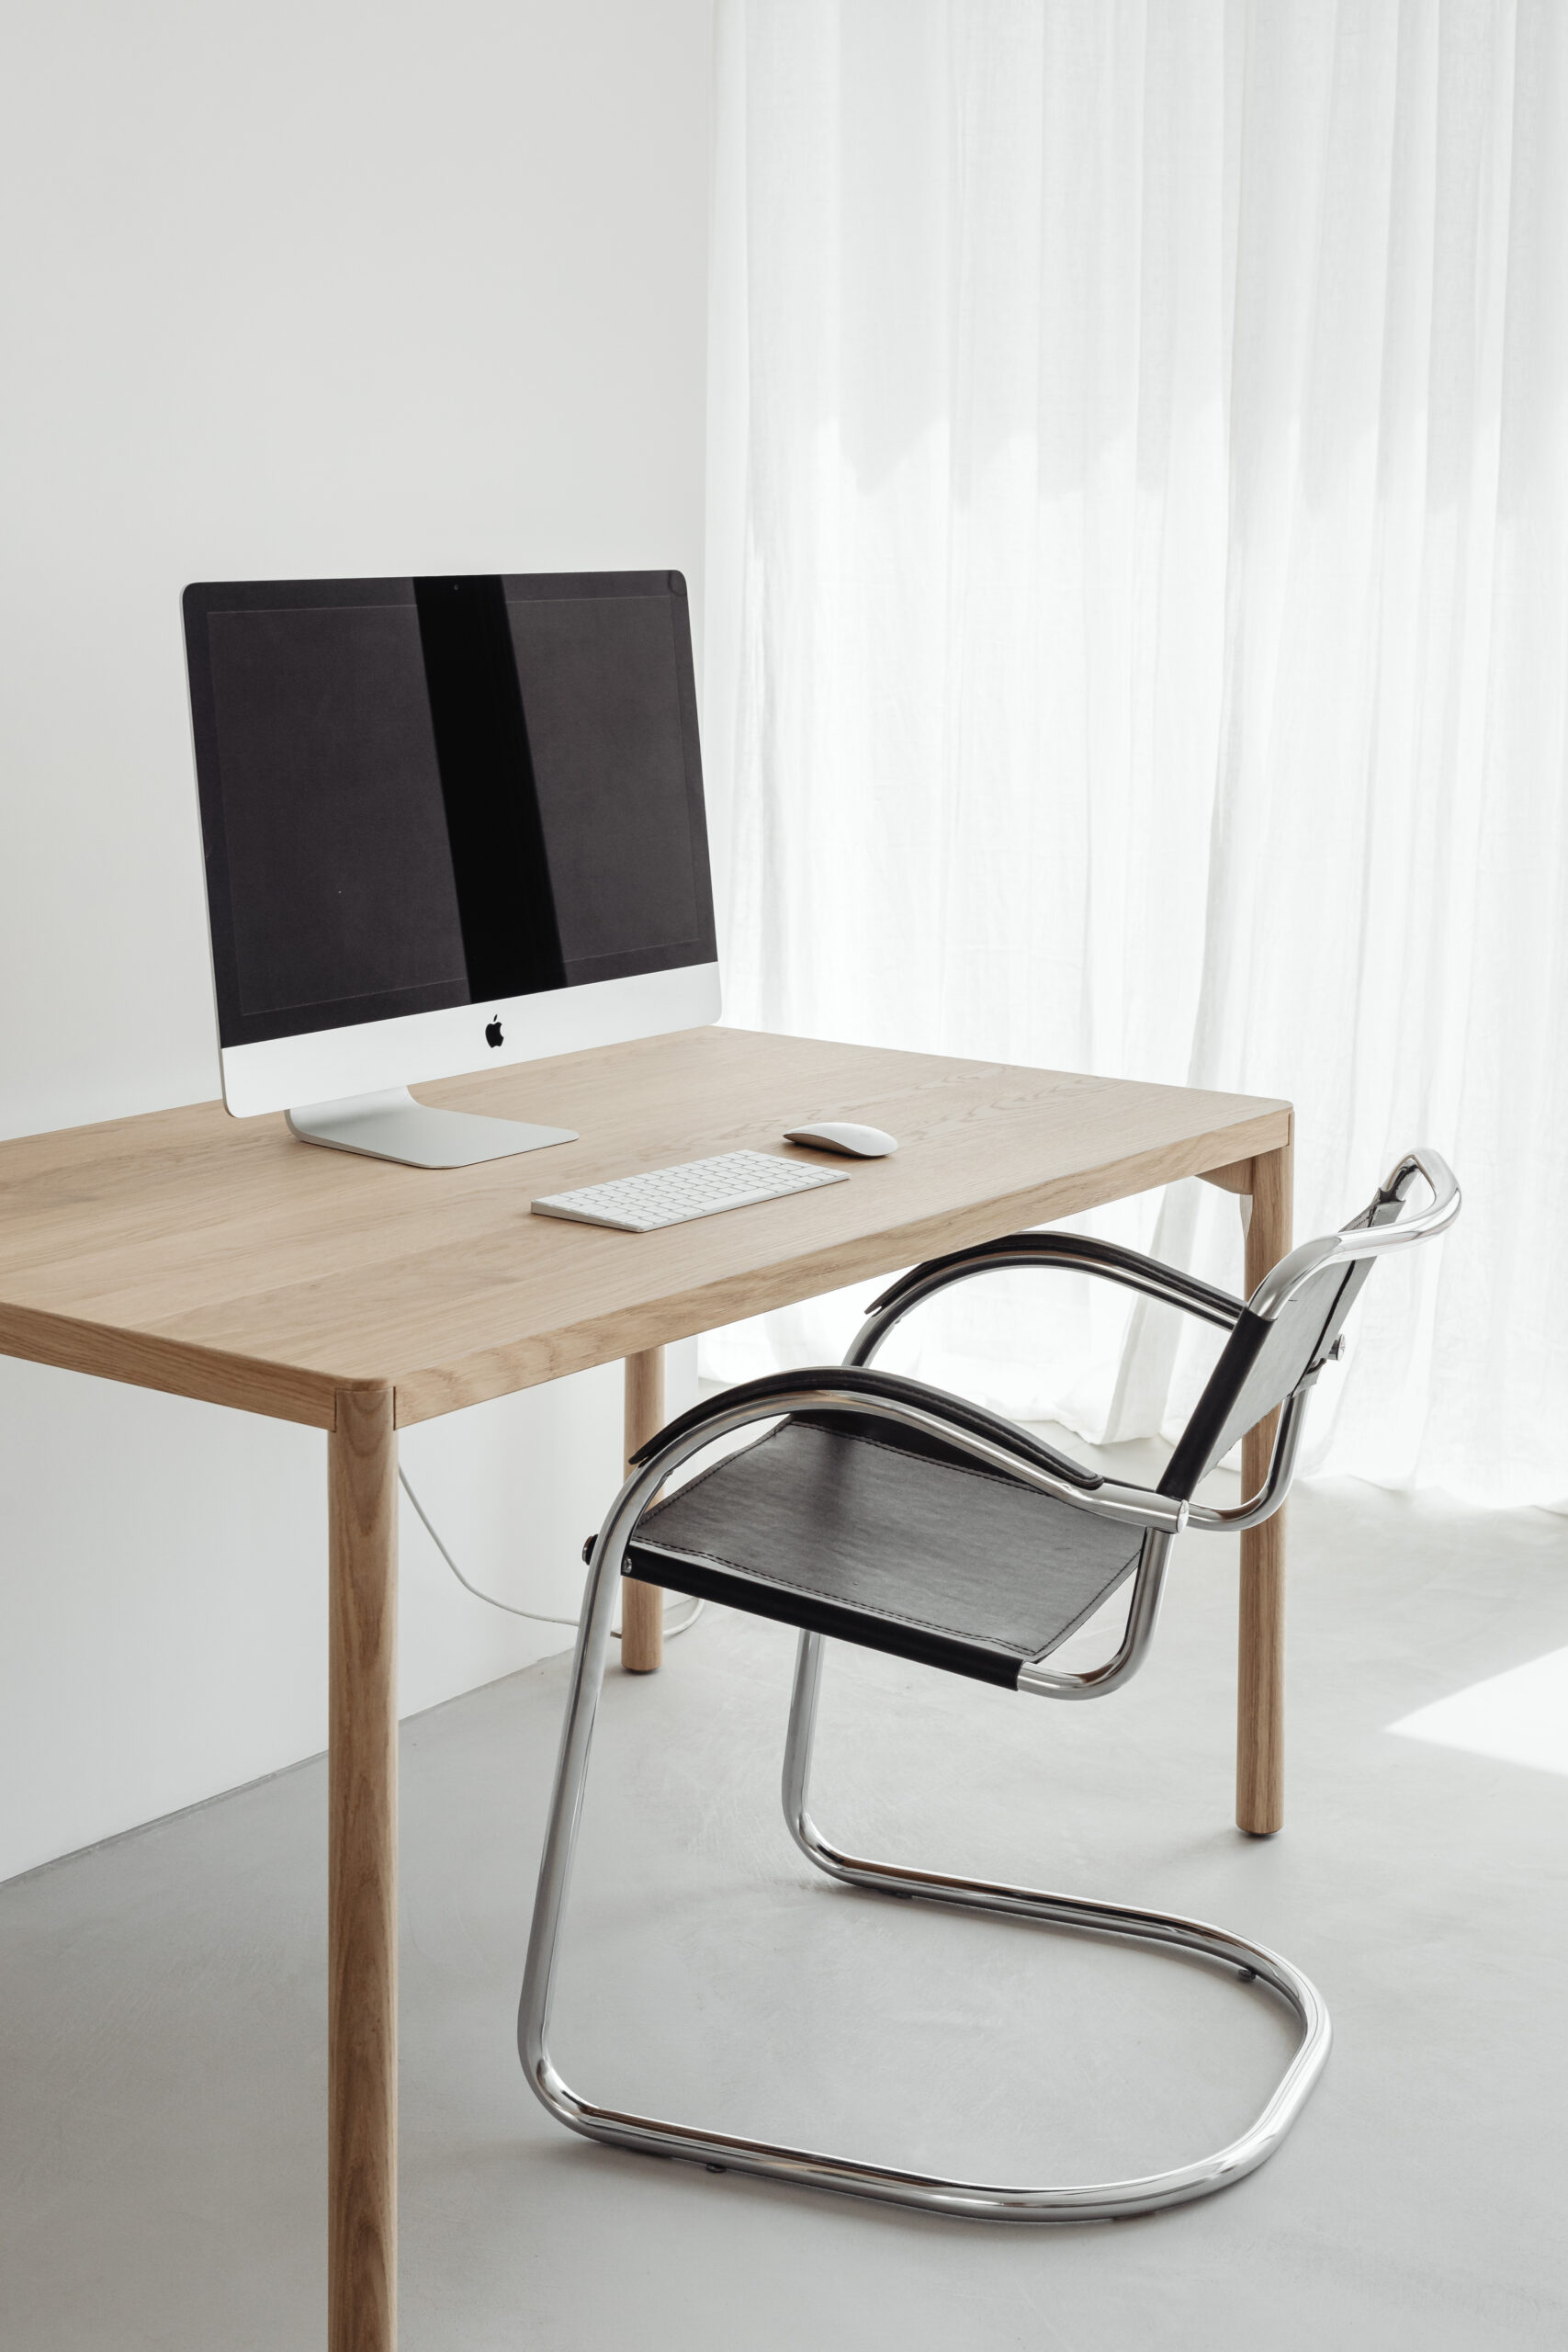 studio pure office wooden minimalist computer desk 27286